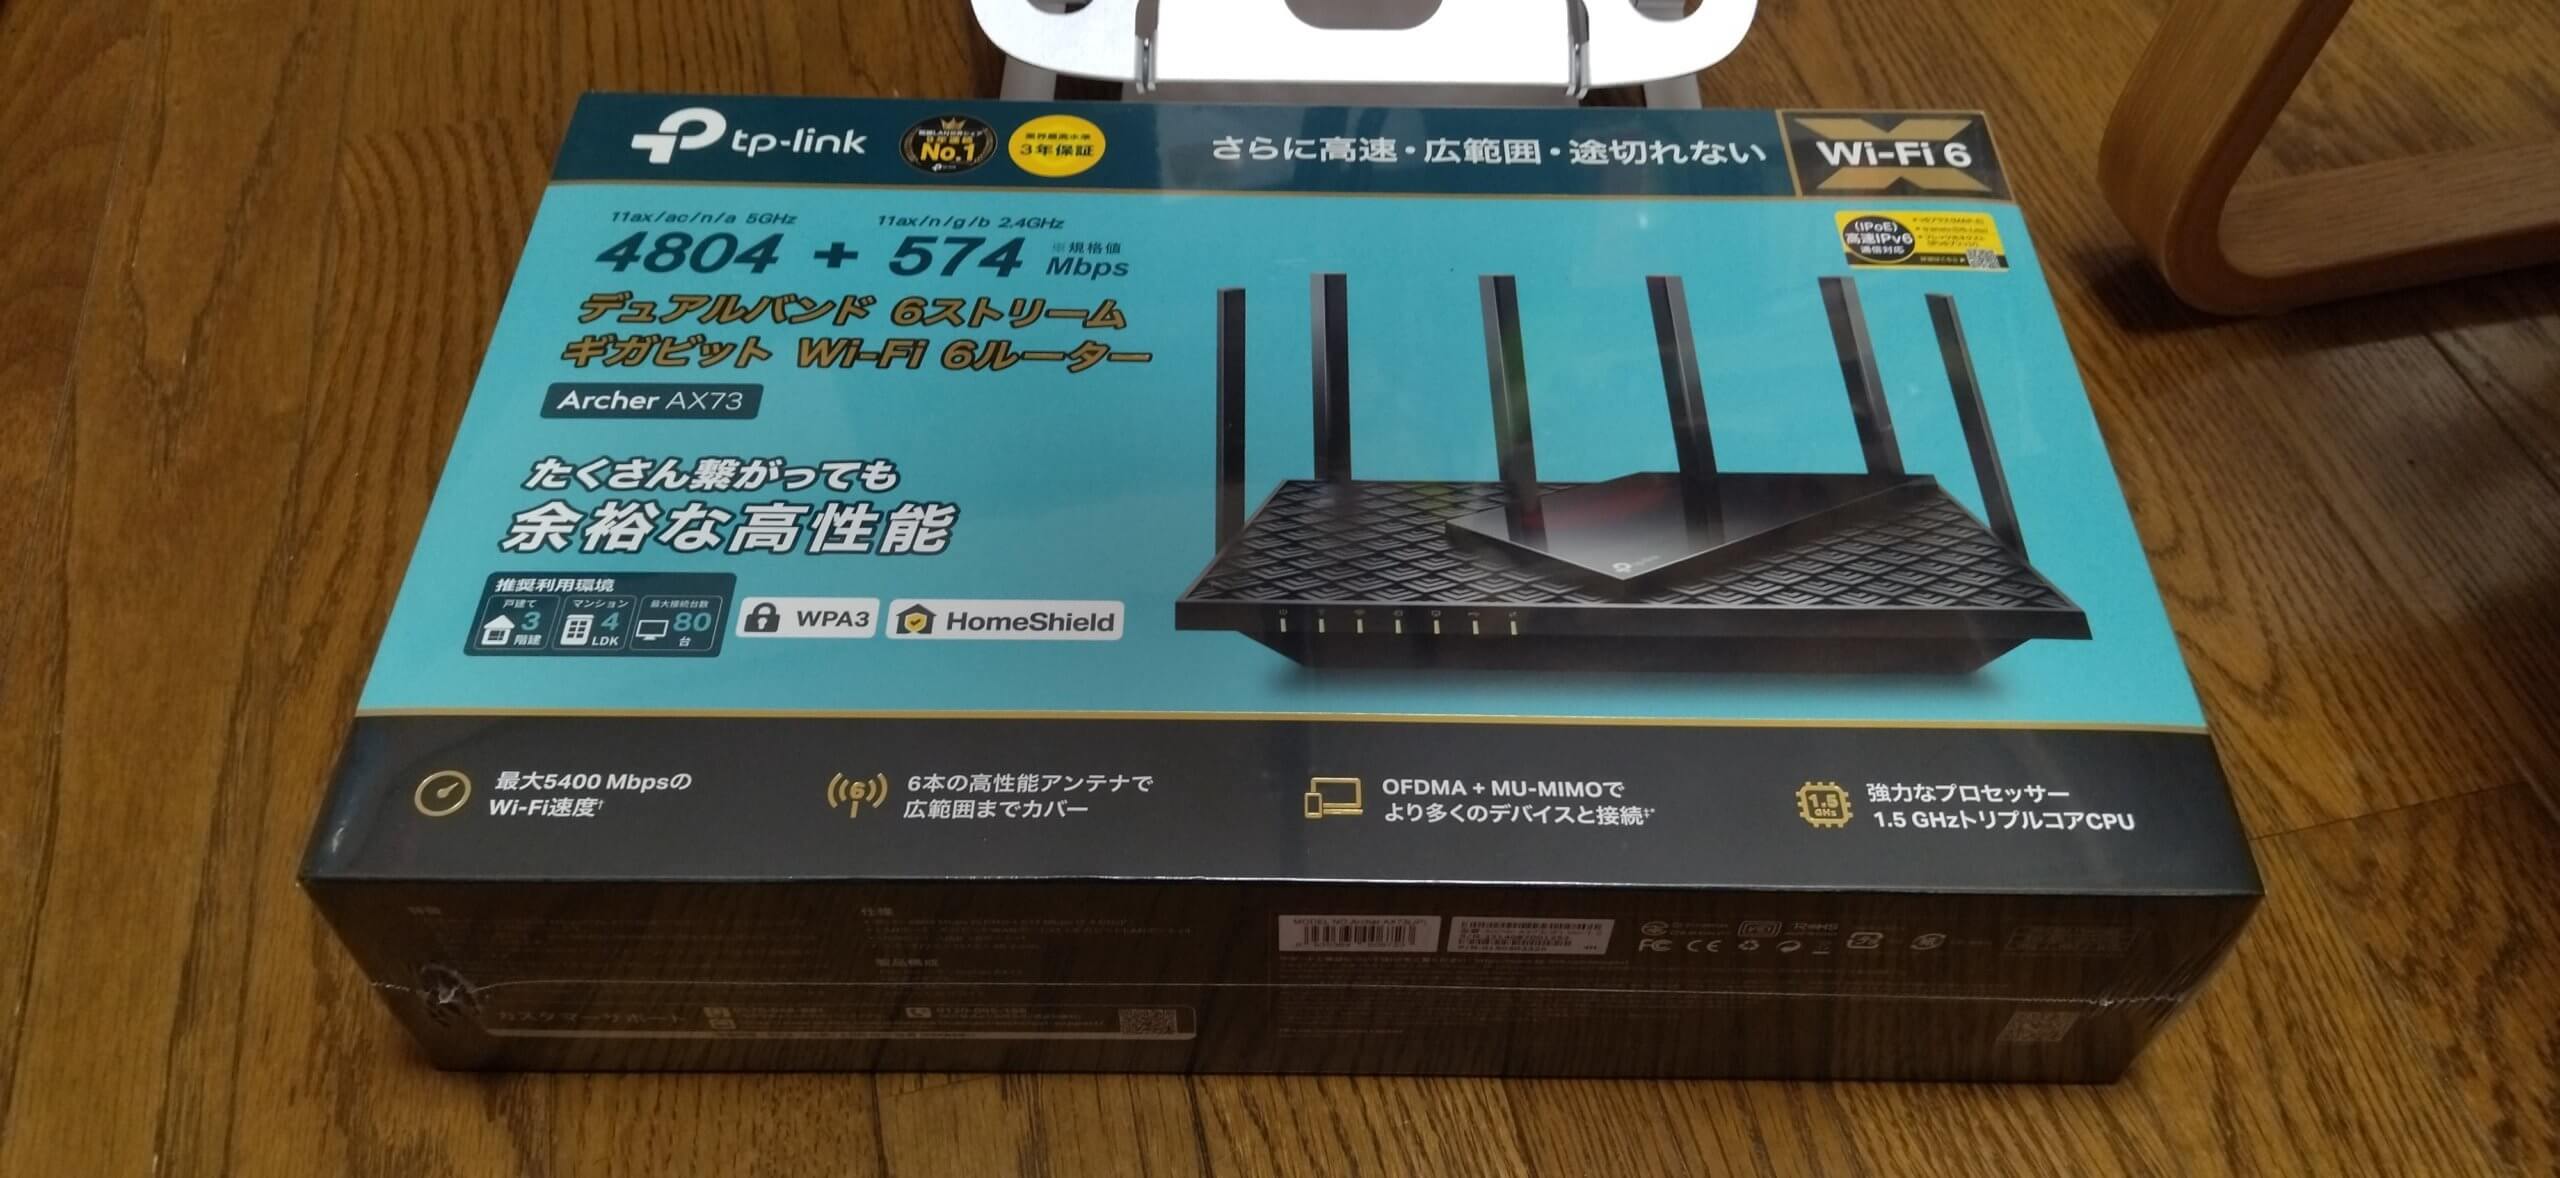 Wi-Fi6対応 TP-Link Archer AX73をレビュー | わたしにゅーす – Me(ow)News